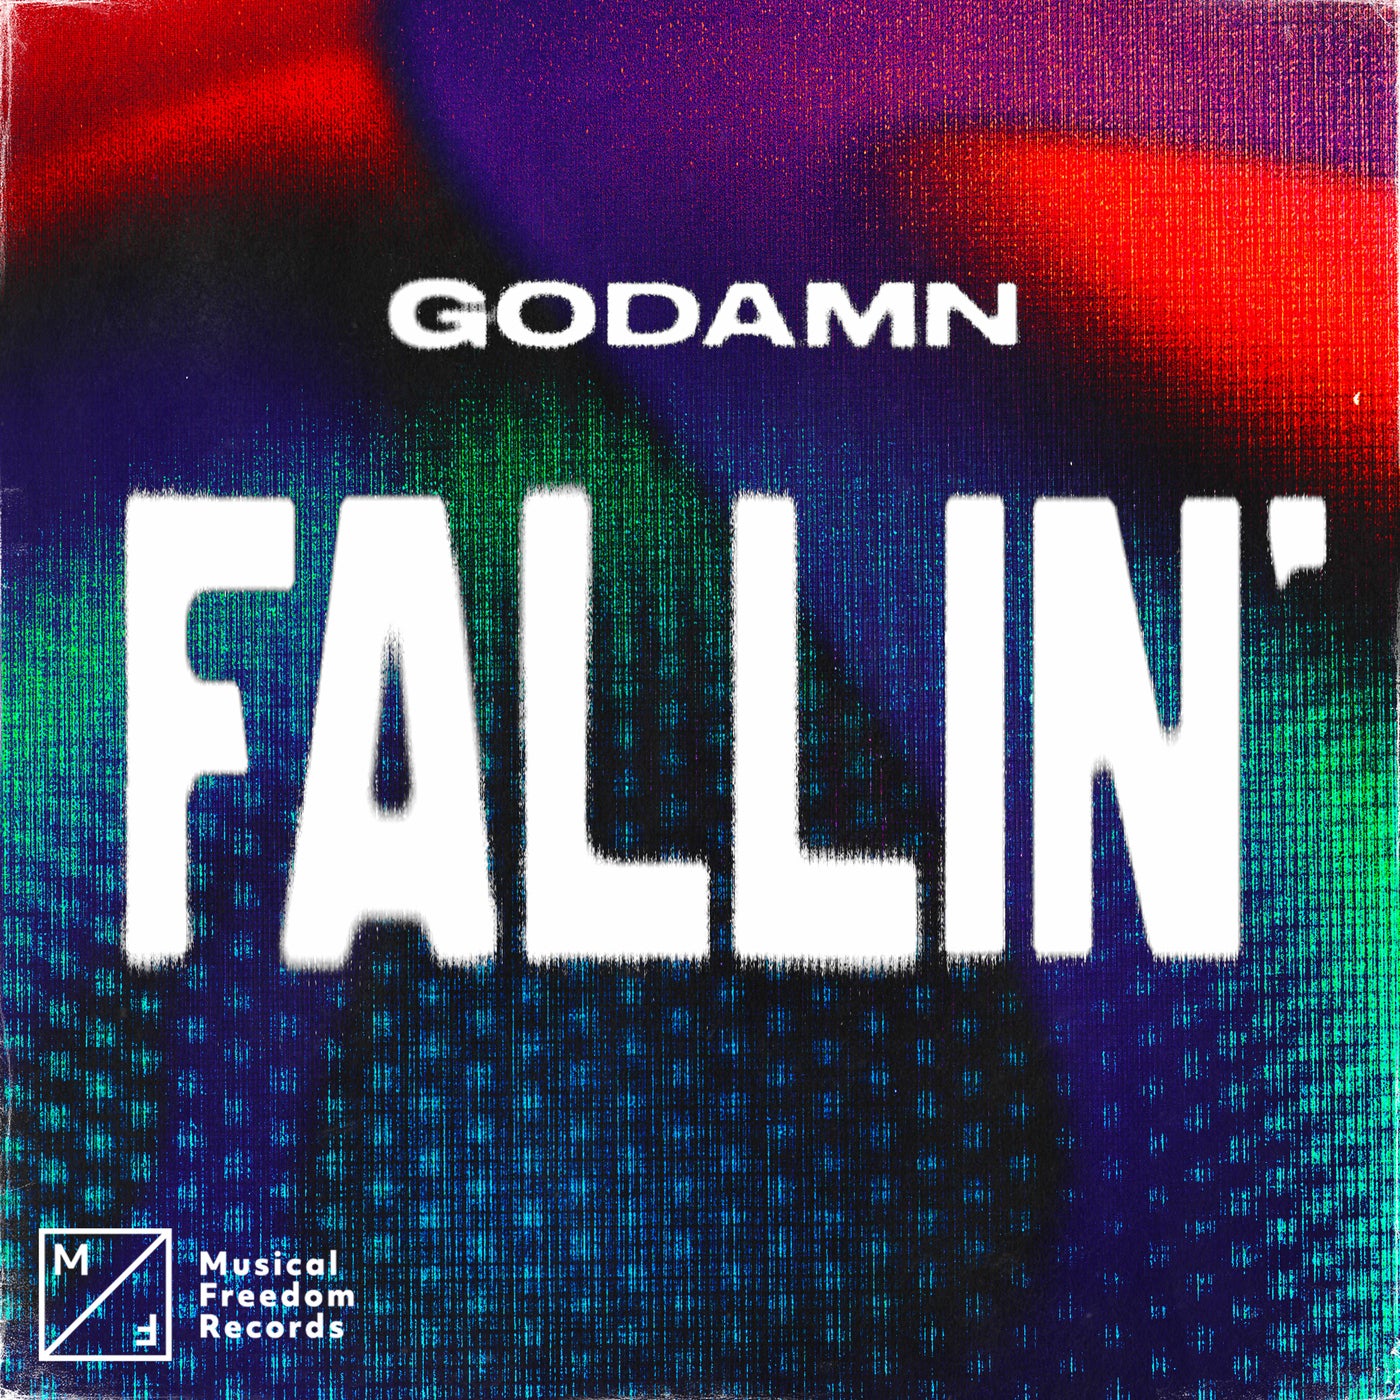 Fallin' (Extended Mix)